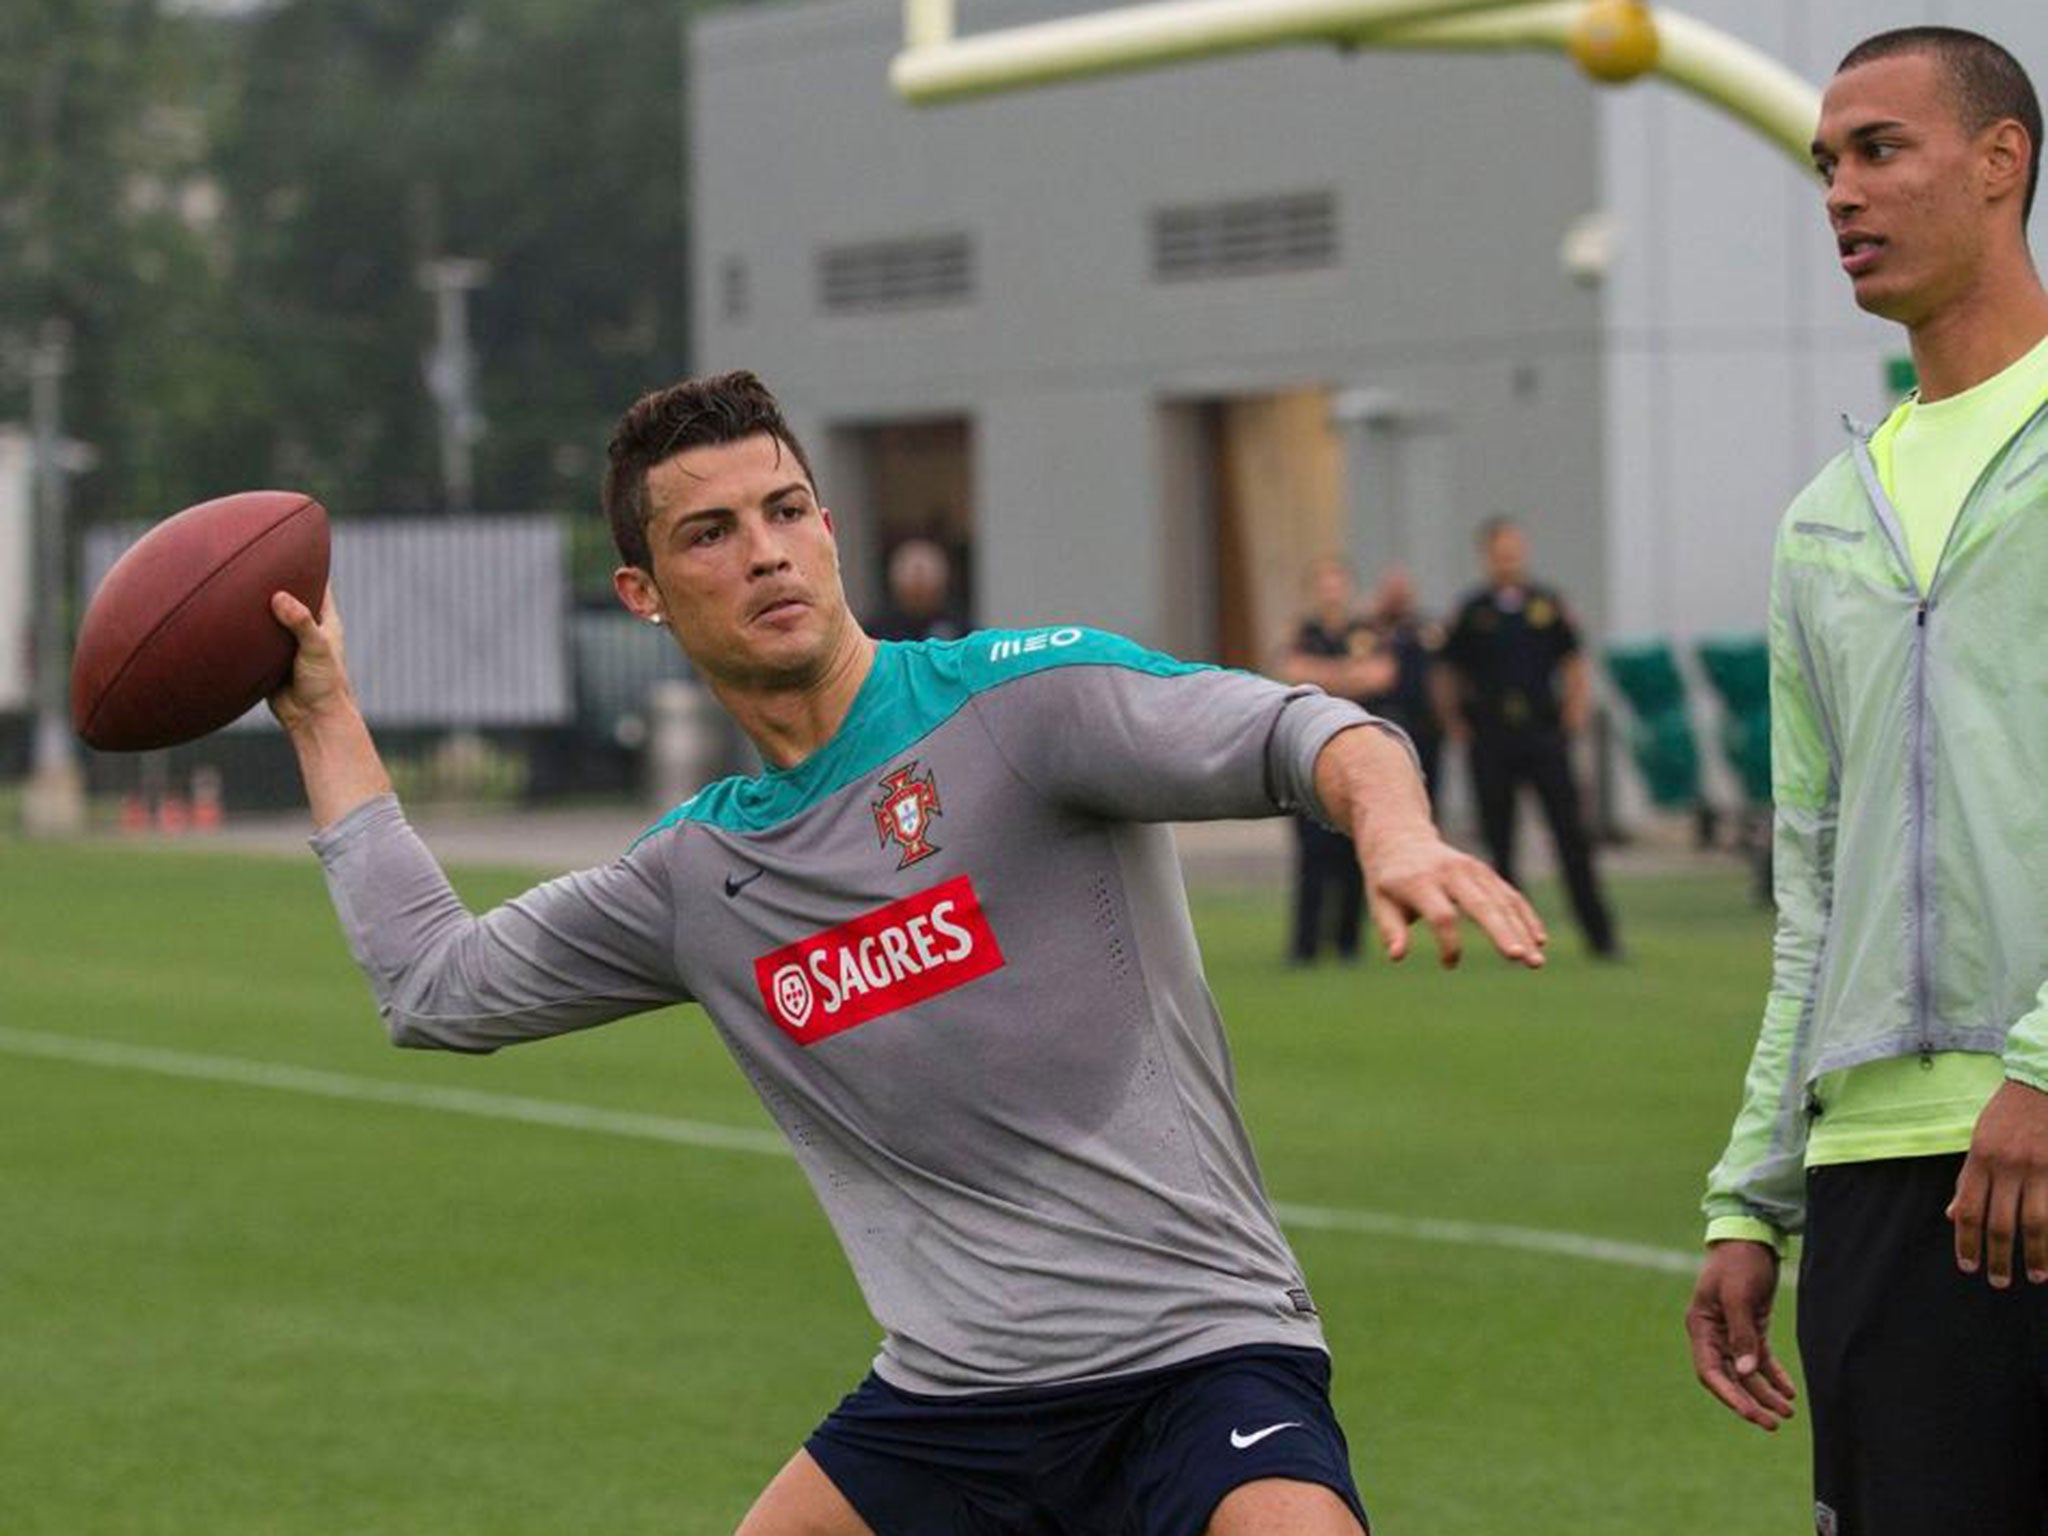 Cristiano Ronaldo throws an American football at the New York Jets training facility